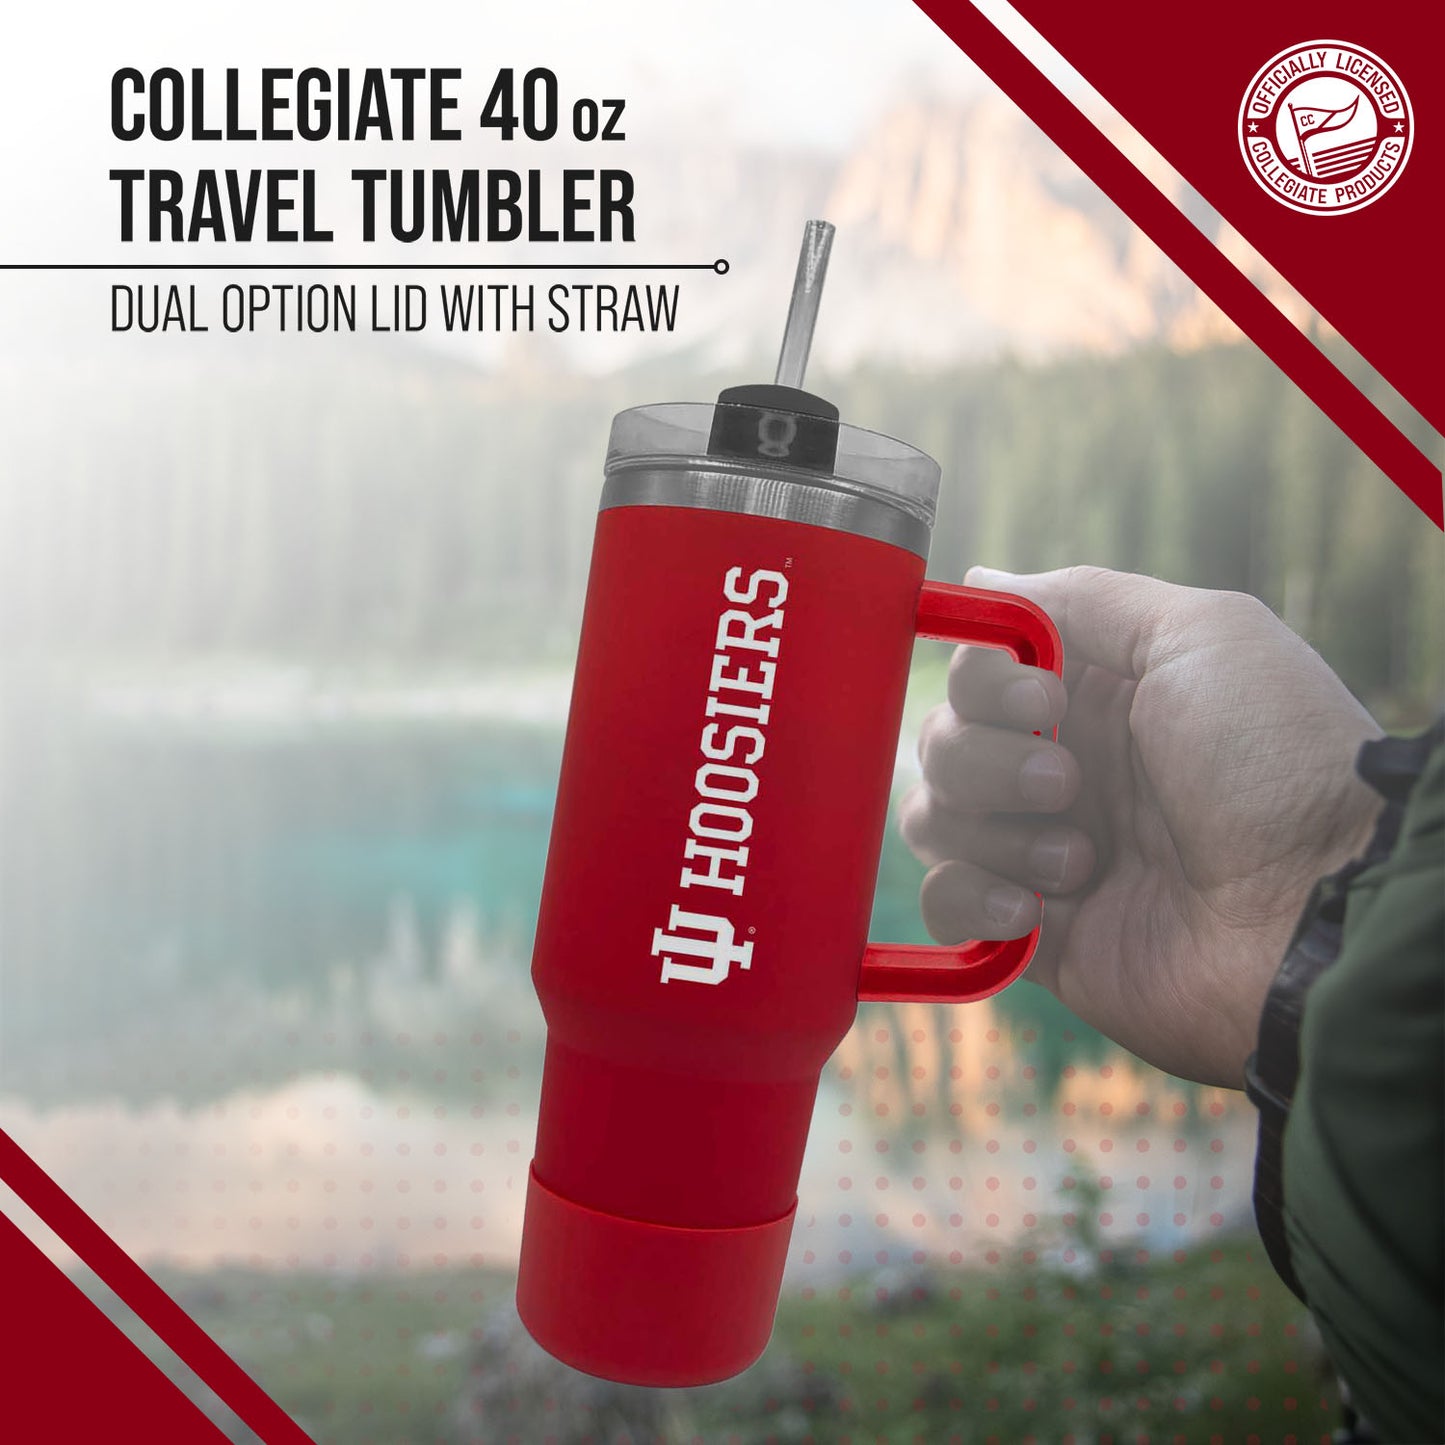 Indiana Hoosiers College & University 40 oz Travel Tumbler With Handle - Crimson